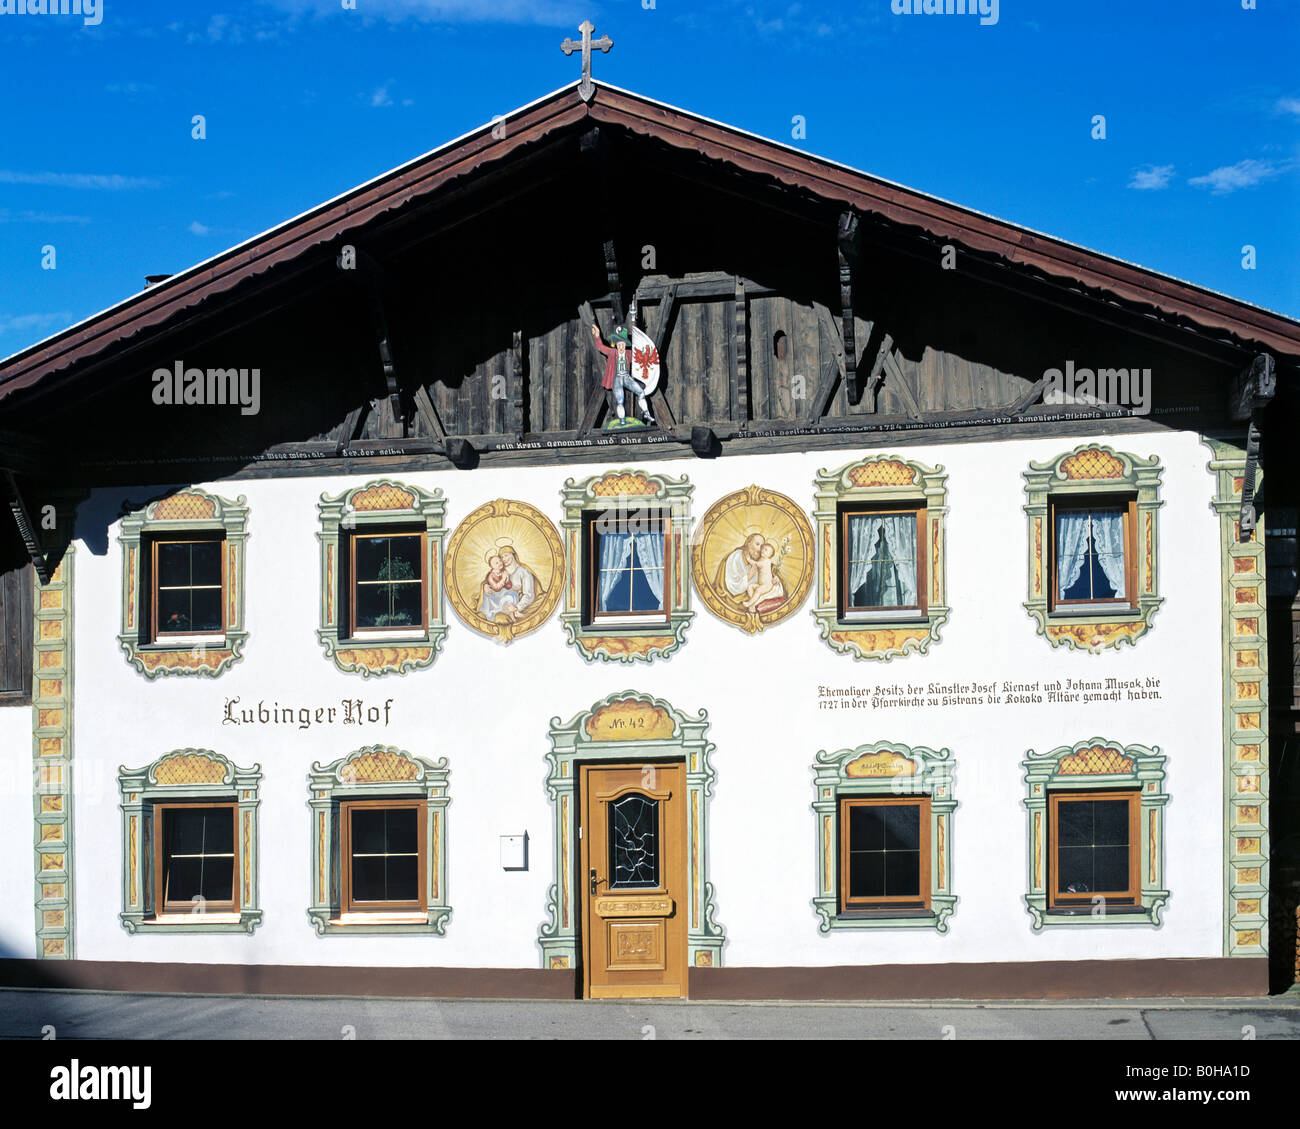 Lubinger Hof, farmhouse, painted and decorated facade, mural art, Sistrans near Innsbruck, Tyrol, Austria Stock Photo